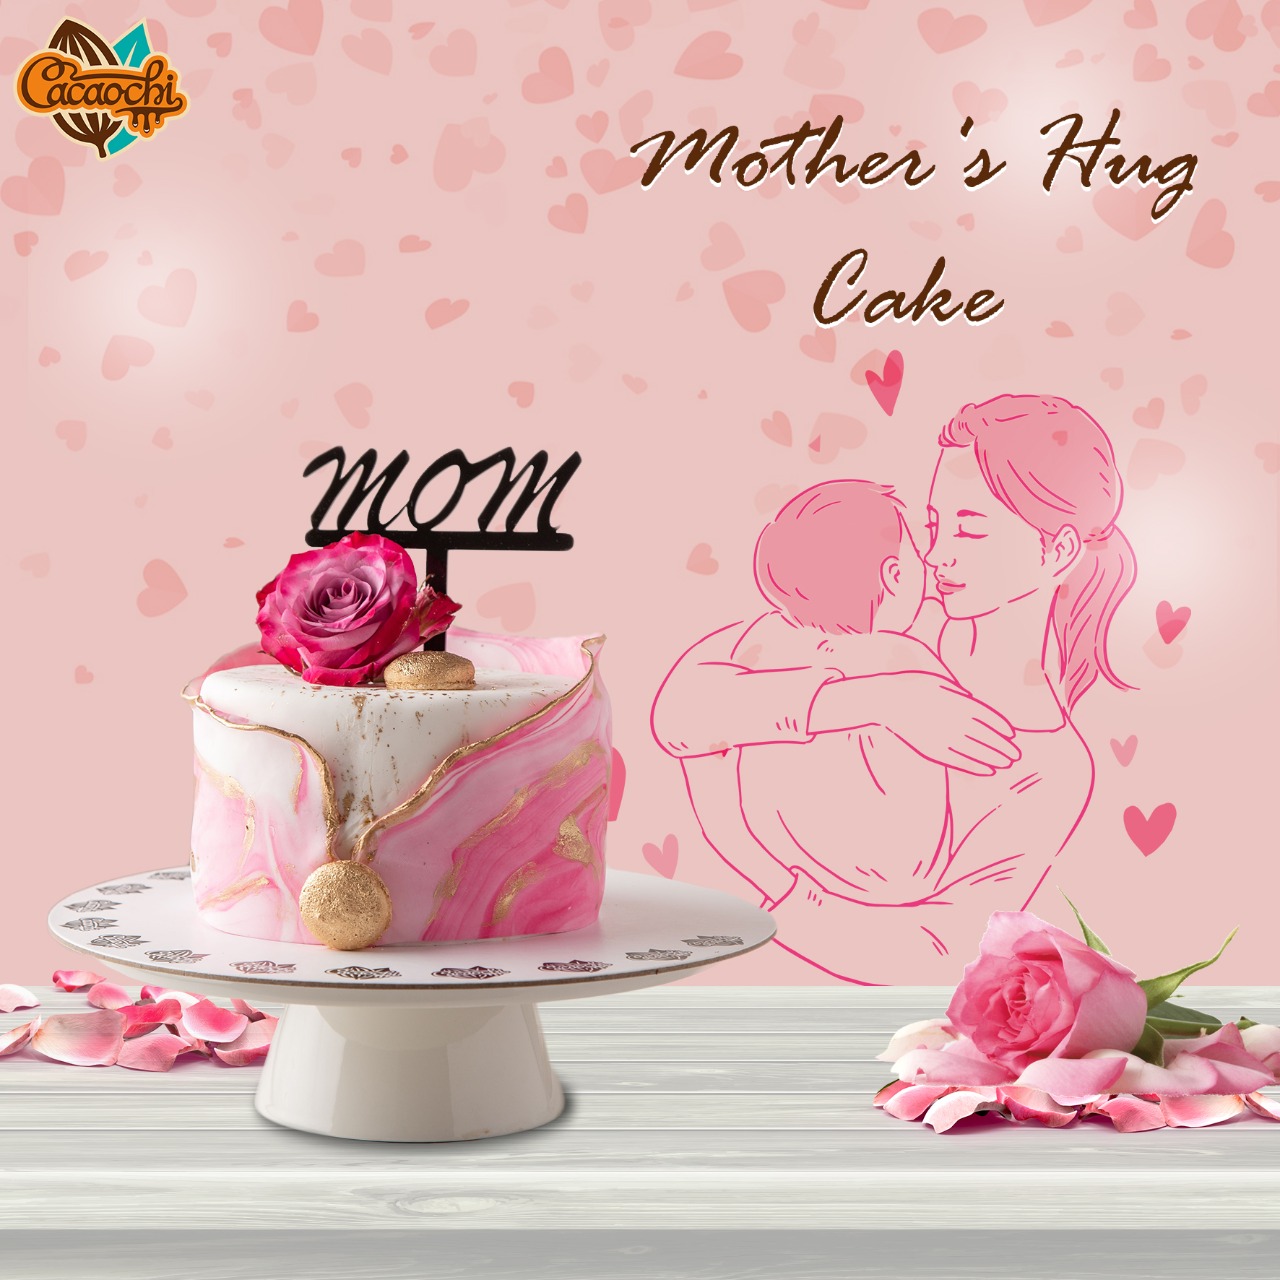 Cacaochi | كاكاوچي on X: "❤ كيكة مليئة بالمشاعر لأغلى من في الوجود اطلب كيكة  عيد الأم من كاكاوجي الآن Order Mother's Day Cake Now Online:  https://t.co/vf2o4hFZxx Call: 22089090 / 50001420 #MothersDay #